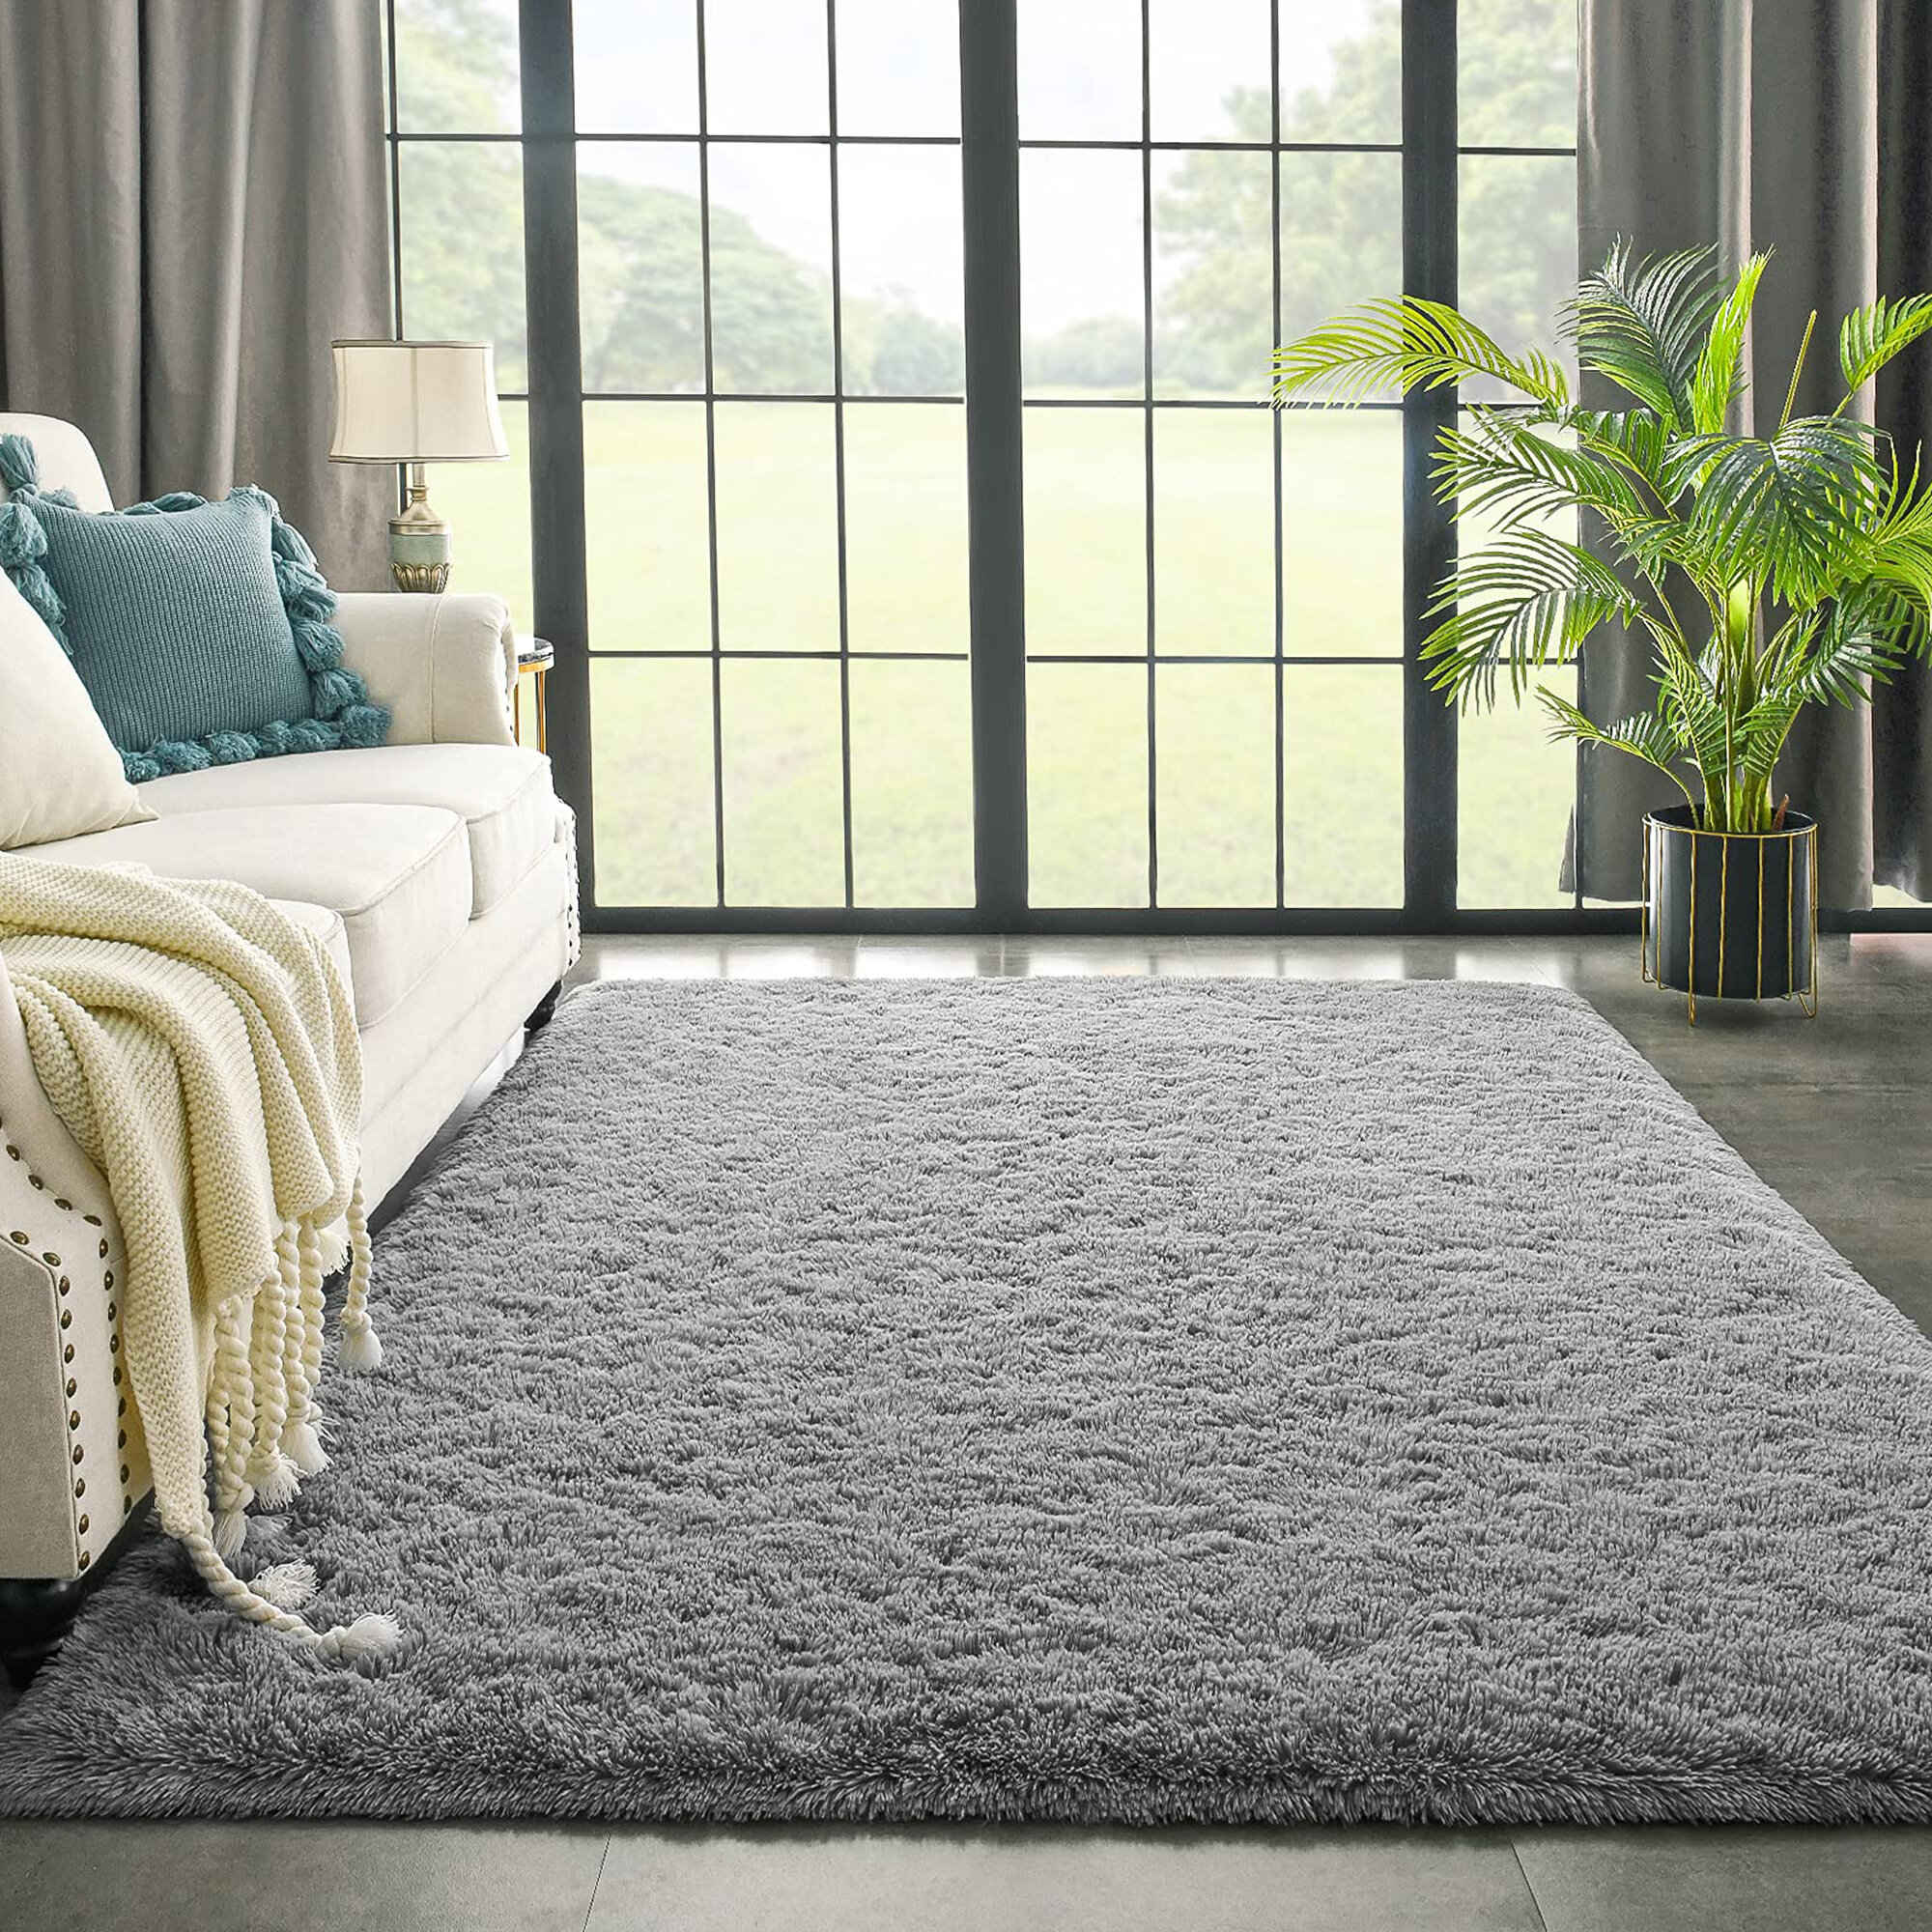 Soft Plush Rugs Anti-Skid Area Dining Room Home Bedroom Carpet Floor Mat Decor 